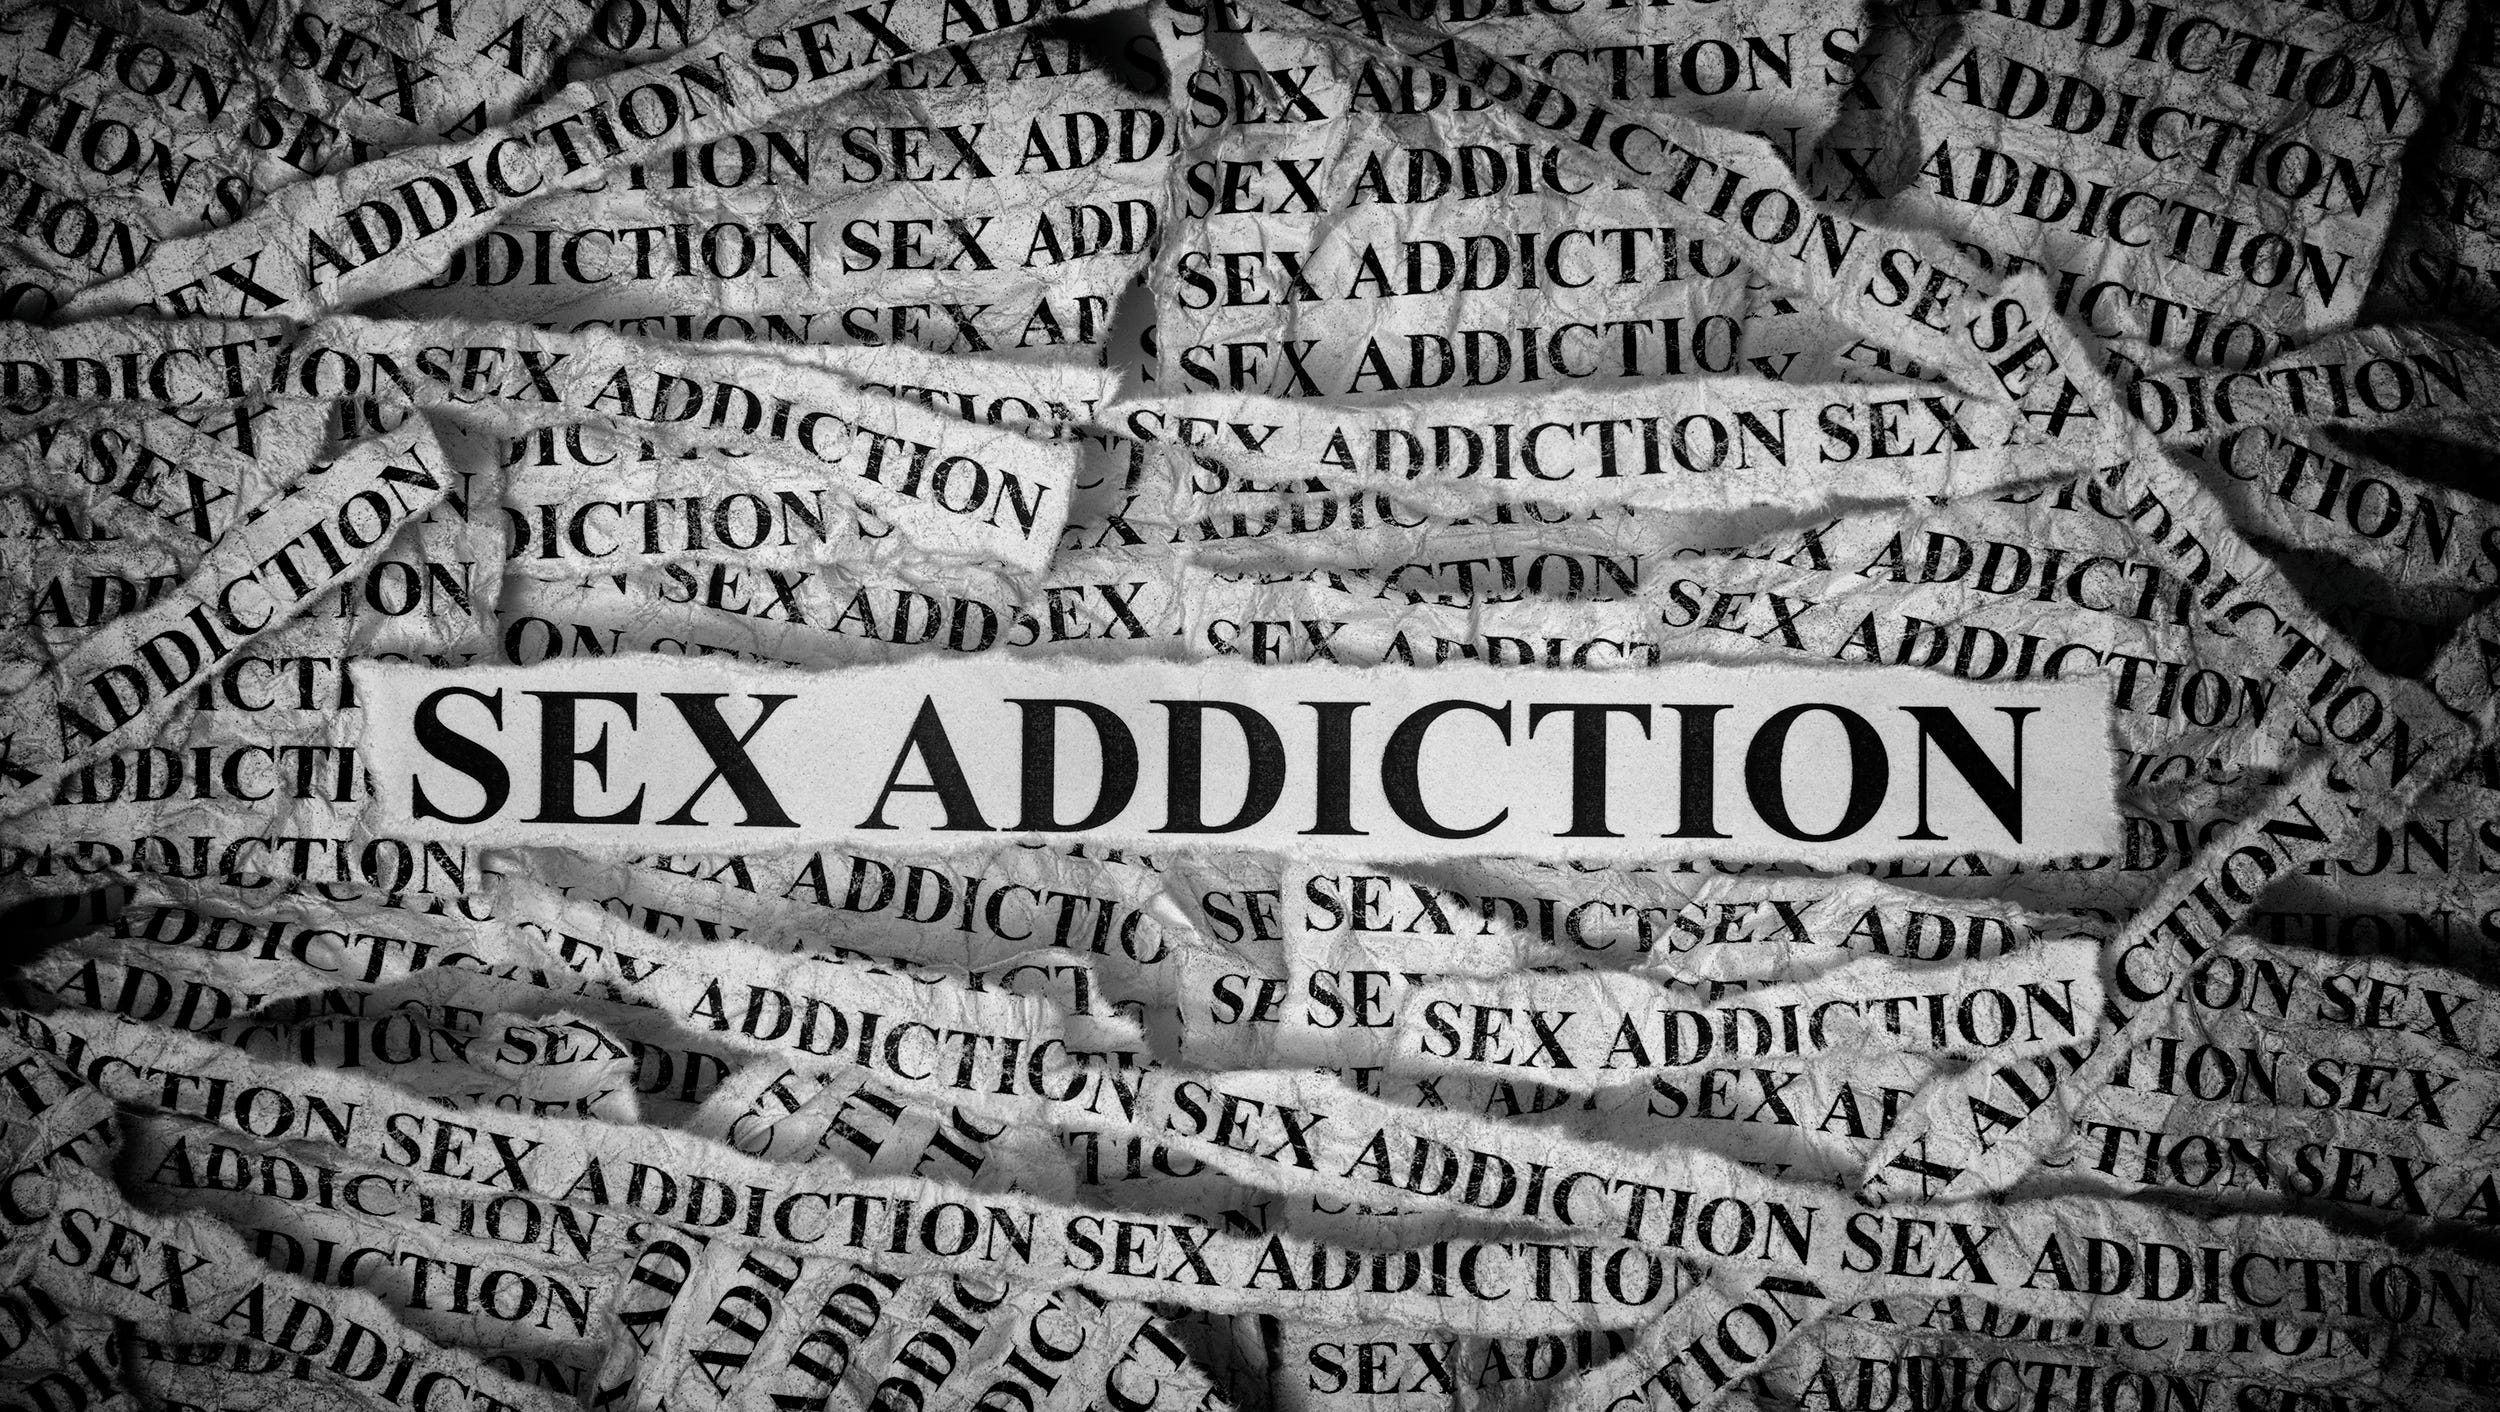 Life inside a sex addiction